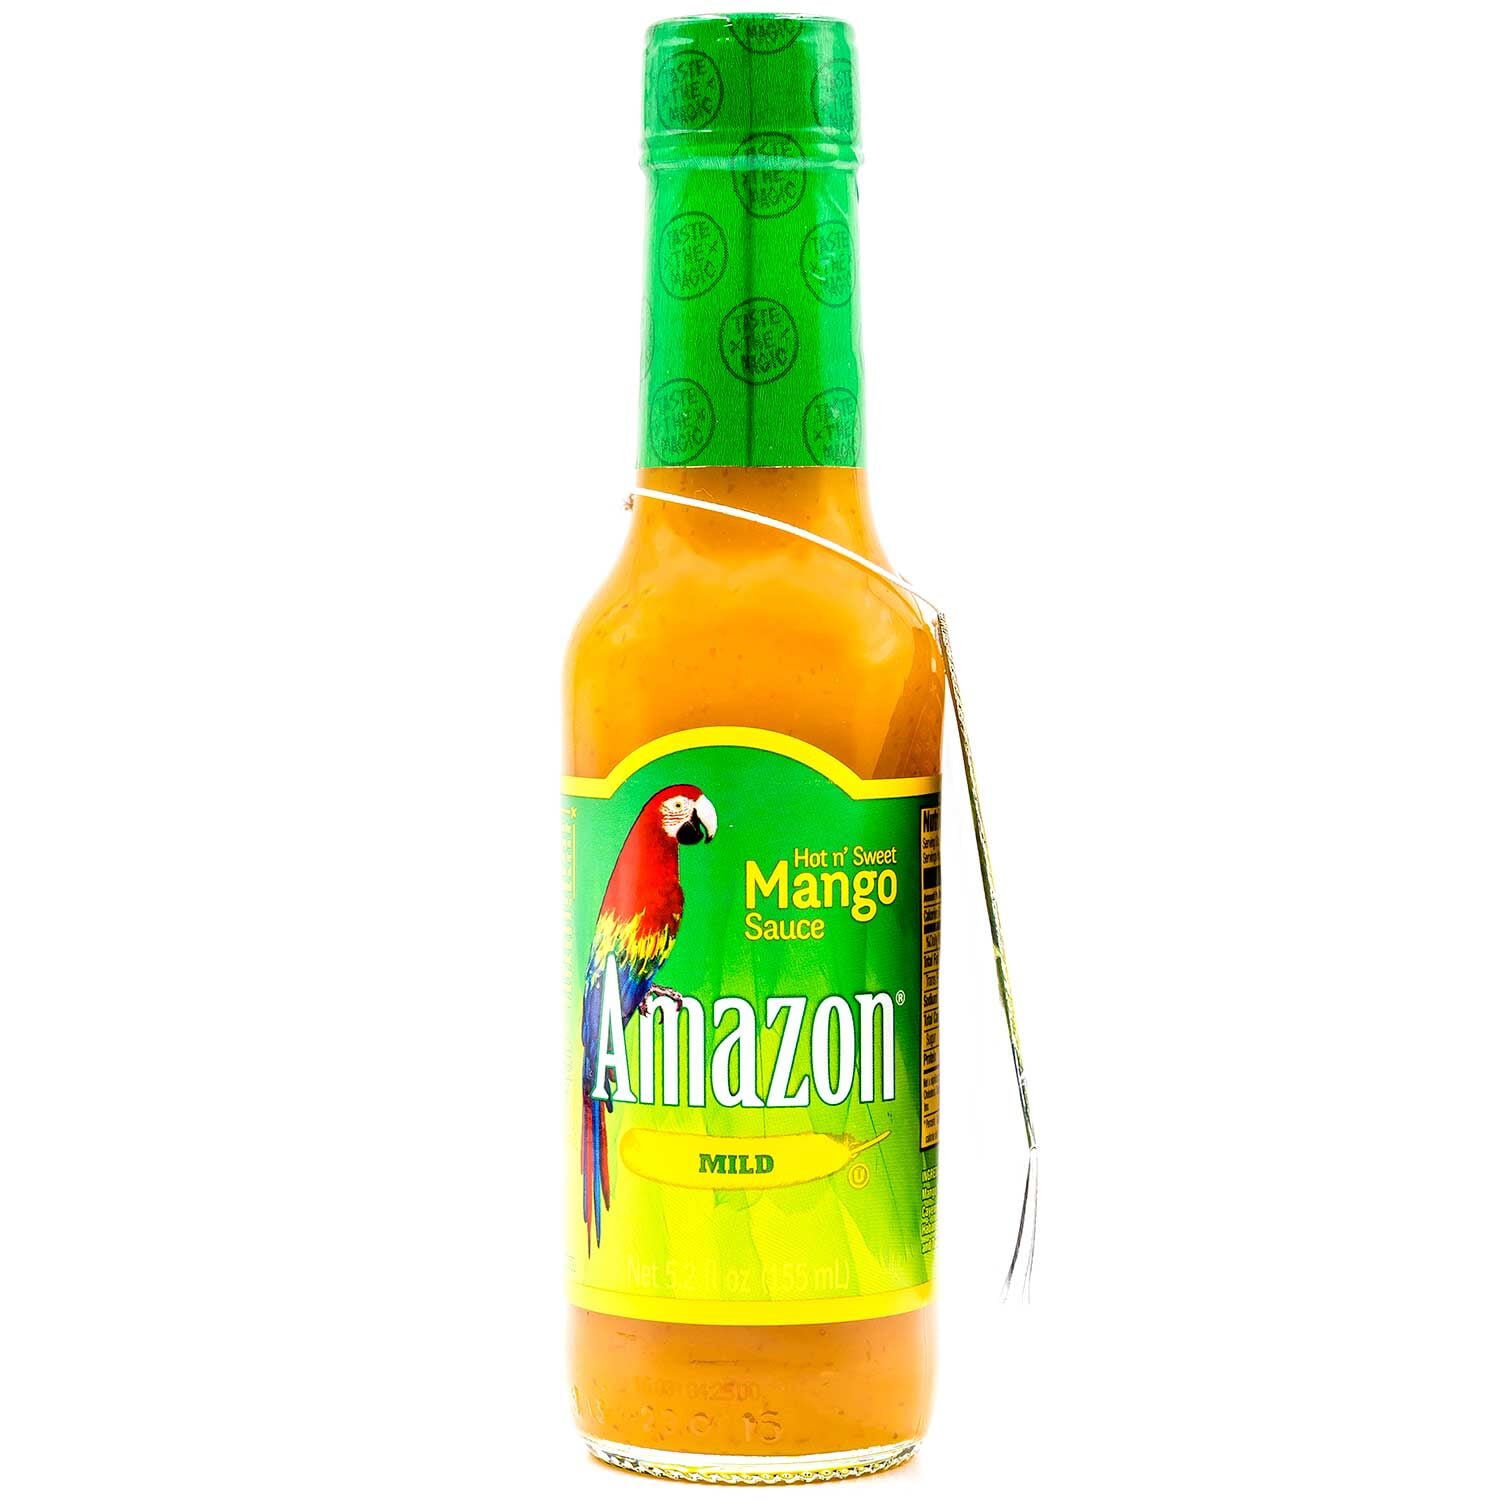 Amazon Hot n' Sweet Mild Mango Sauce, 5.2 oz